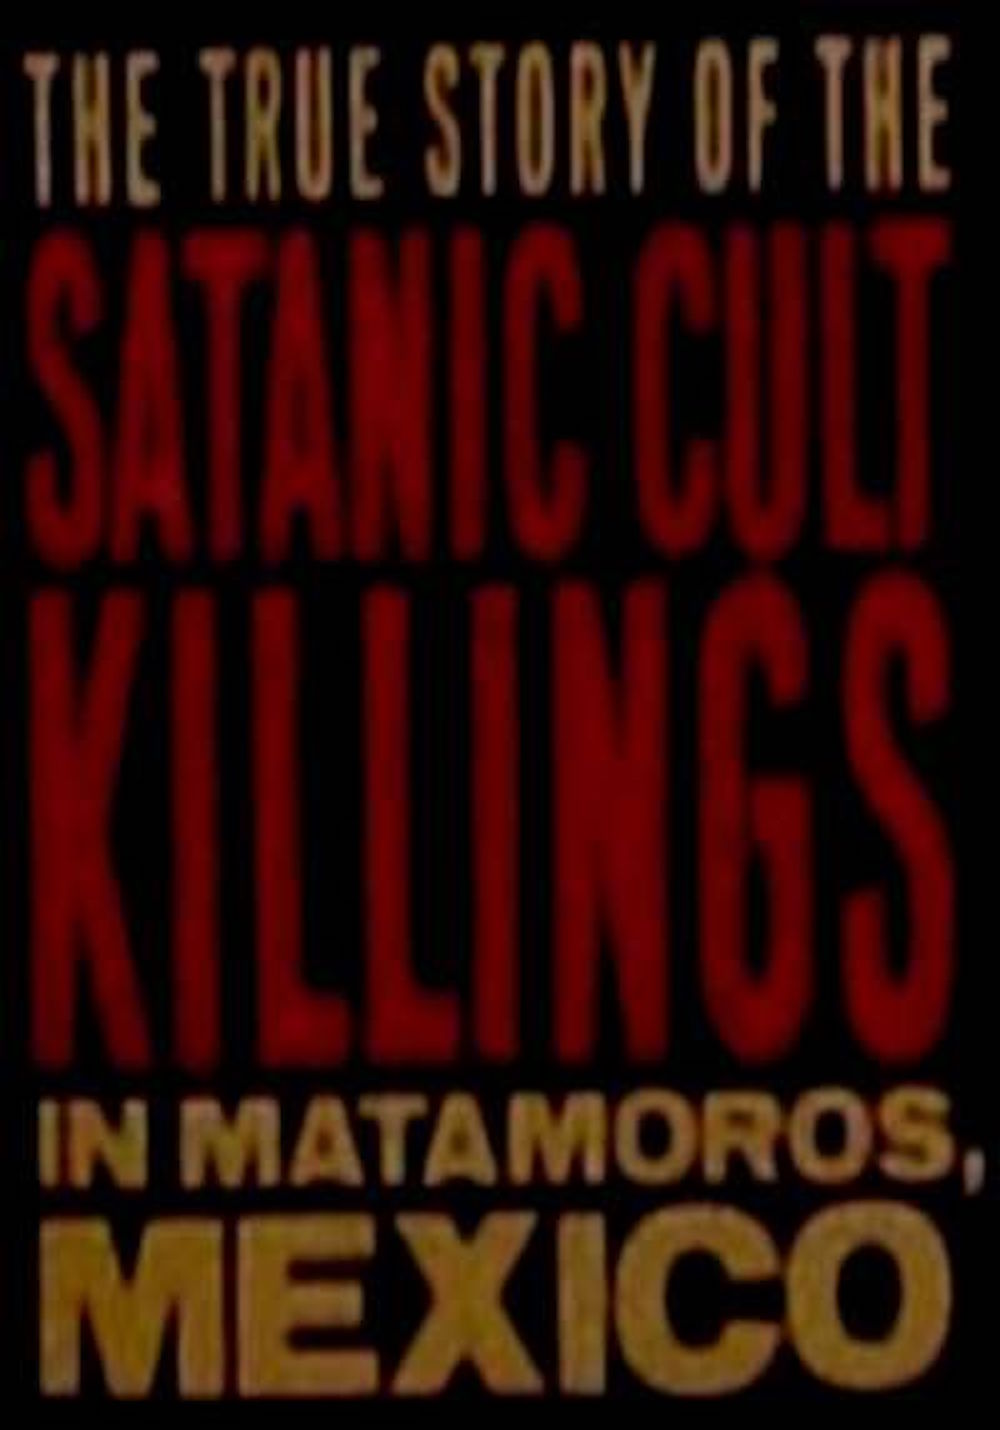 Rituales de Sangre: The True Story Behind the Matamoros Cult Killings (2008) Screenshot 1